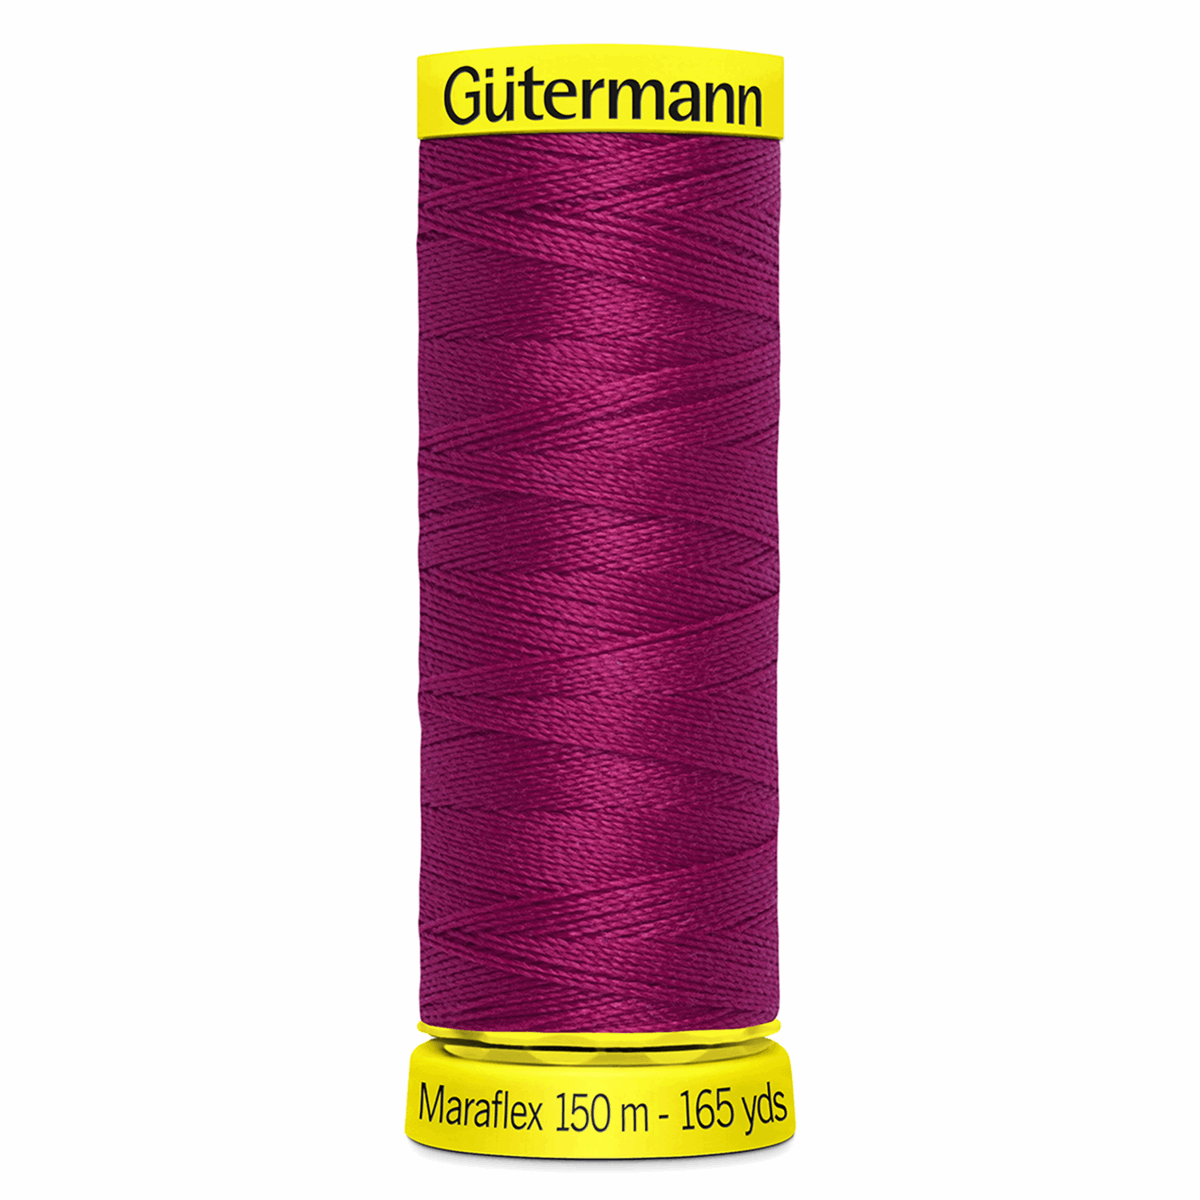 Gutermann Maraflex Elastic Sewing Thread 150m Crimson 384